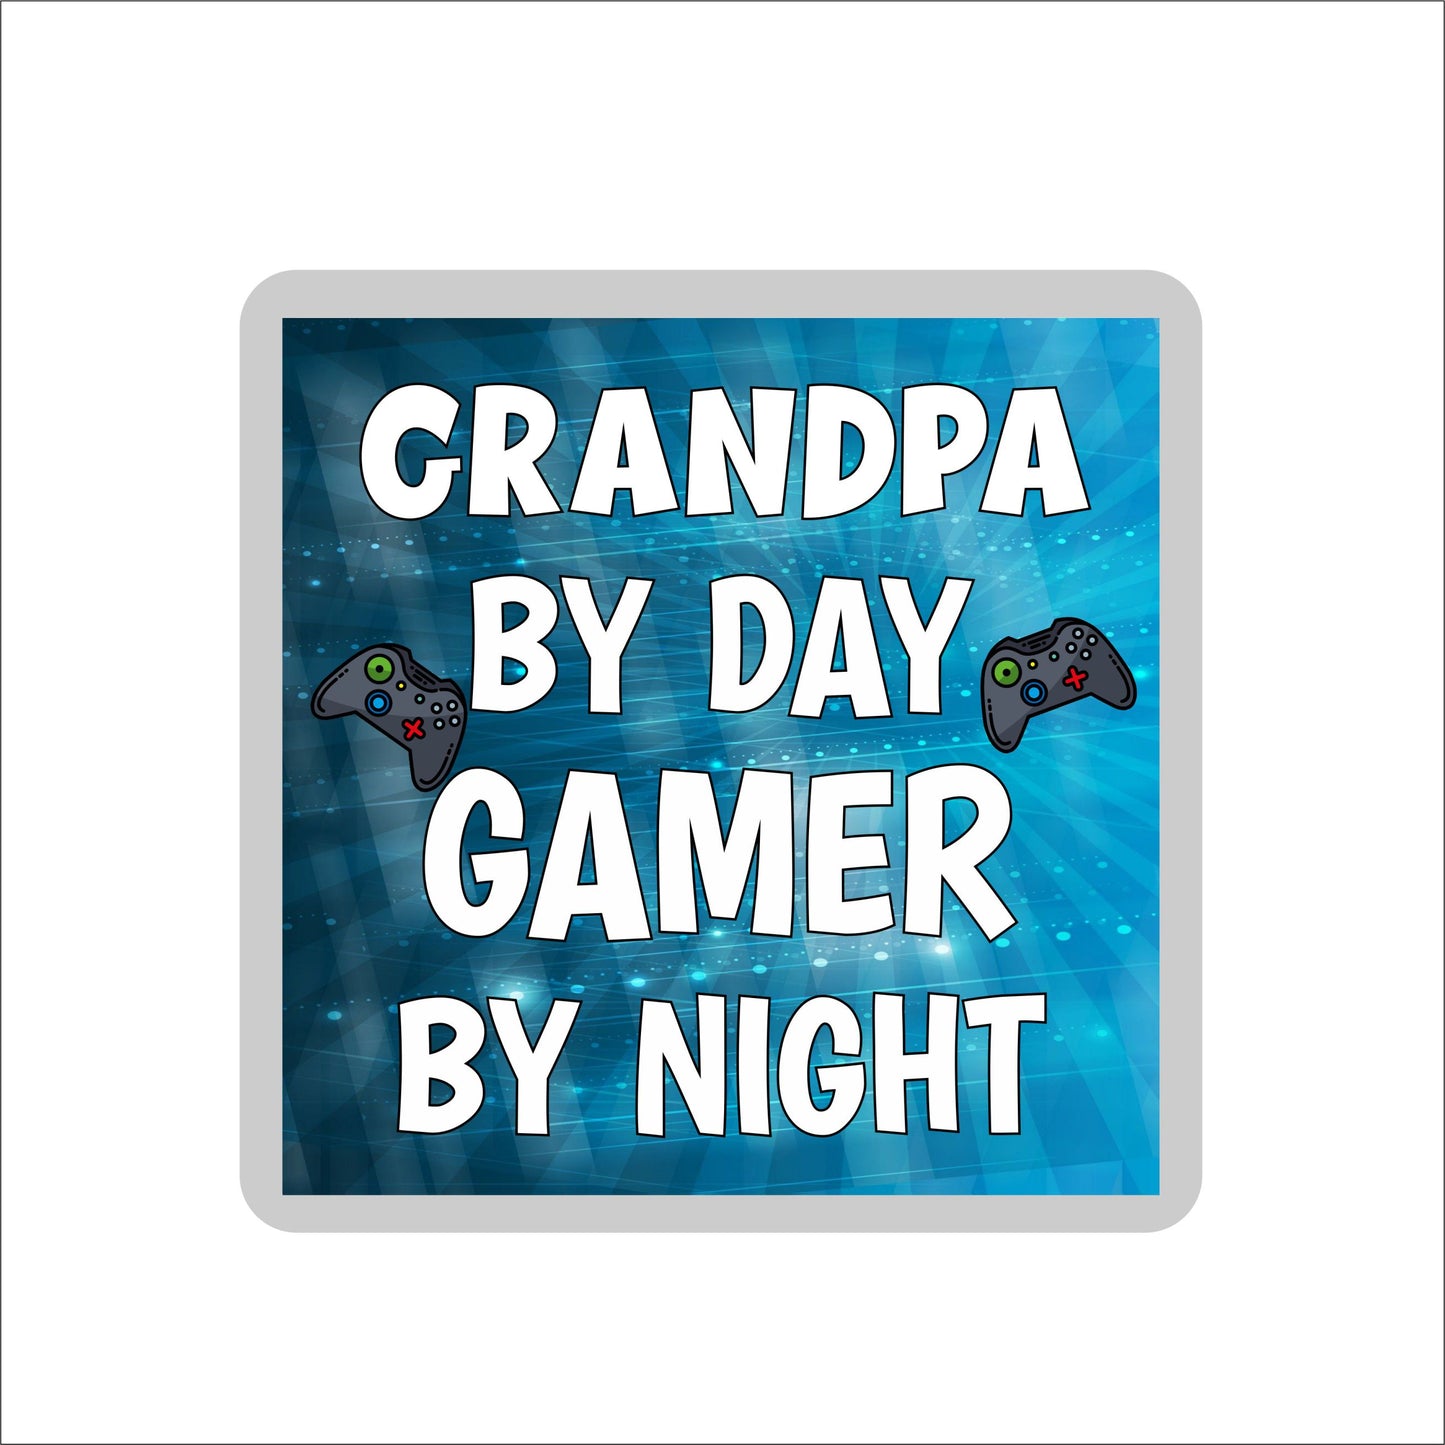 Grandpa Gaming XBOX Coaster Gift - Grandpa By Day Gamer By Night - Cute Fun Cheeky Novelty Present